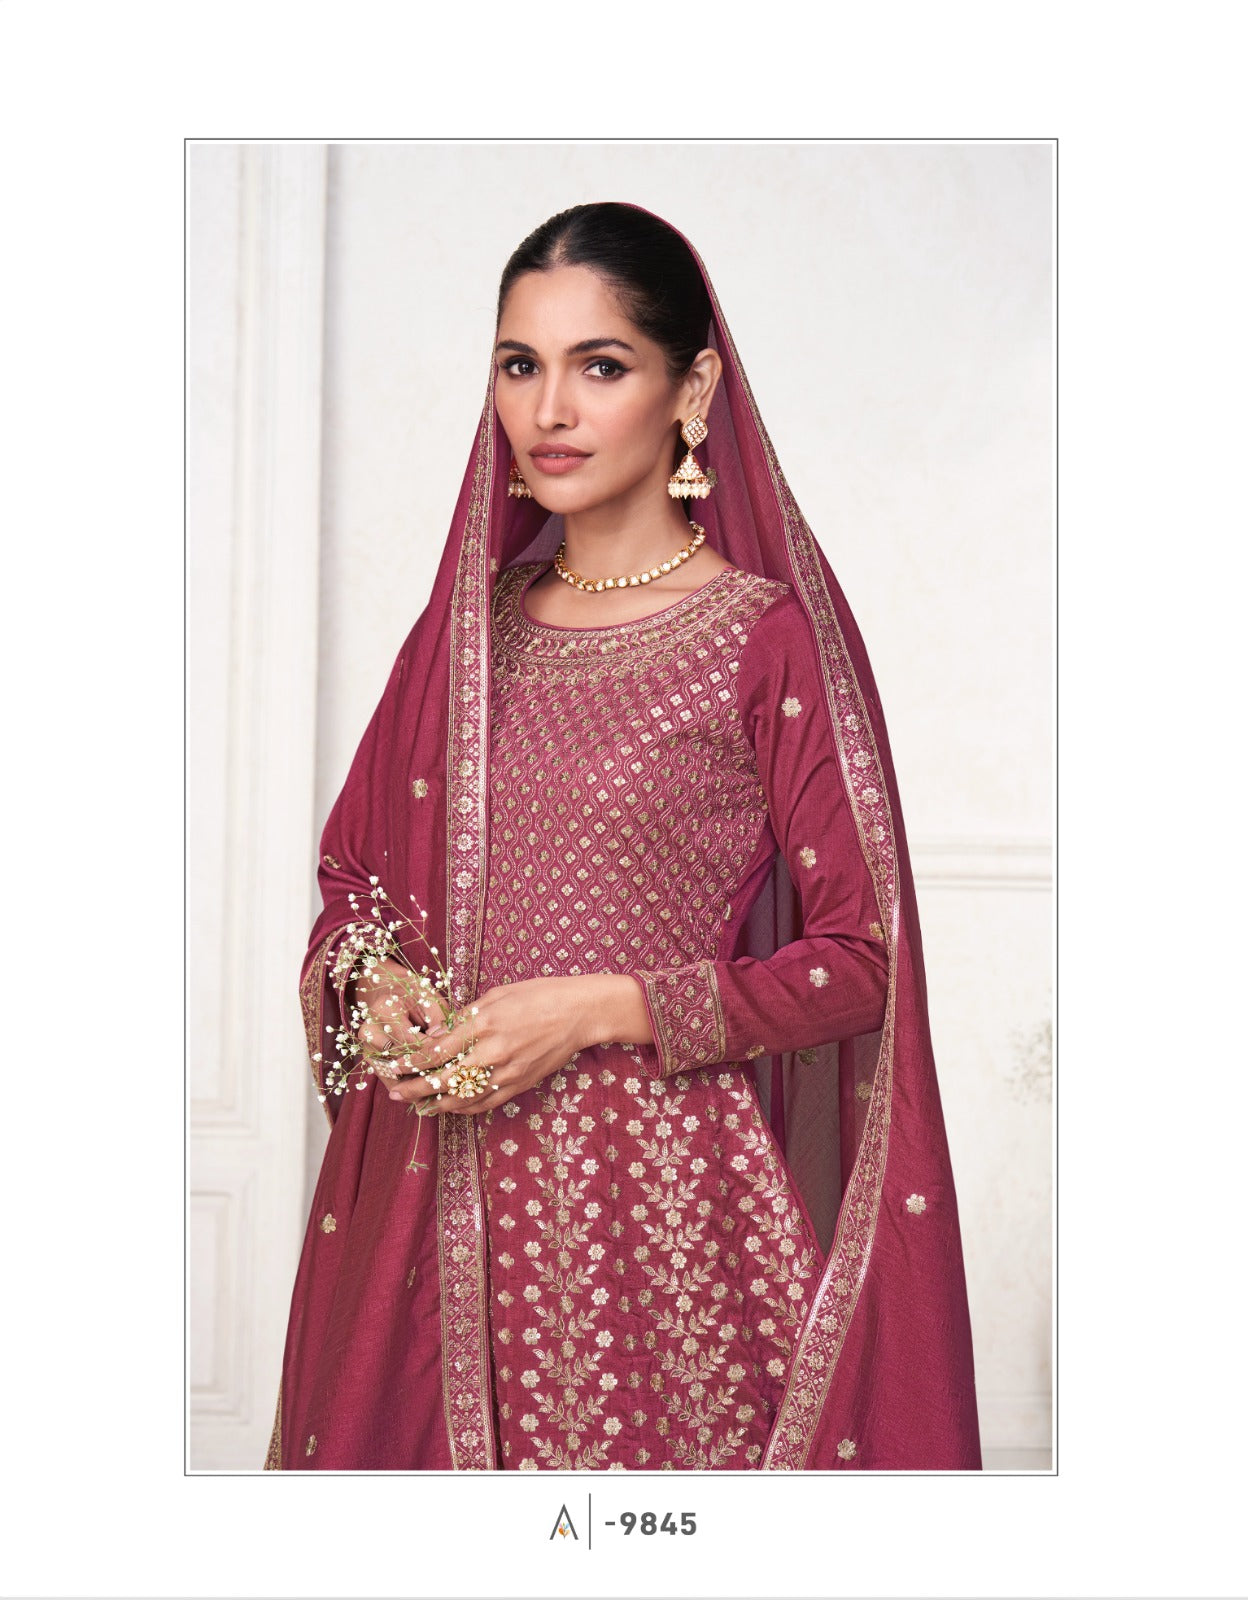 Sargam-Nx Aashirwad Creation Premium Silk Readymade Suits